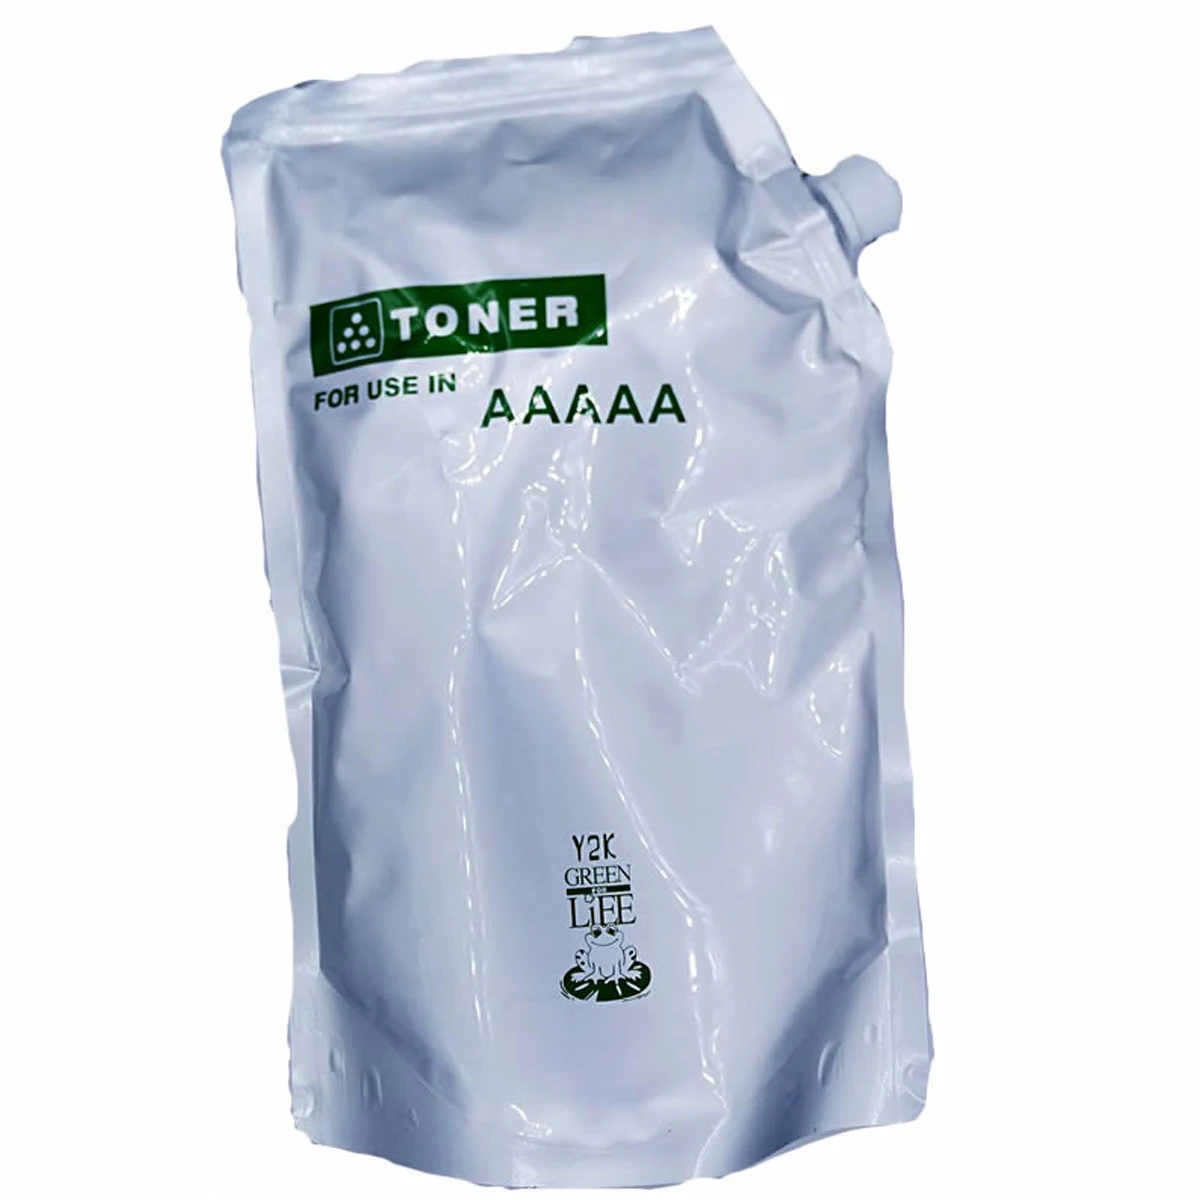 

1KG Toner Powder FOR TRIUMPH ADLER Utax Triumph-Adler TA 3060 i 3061 i CD-3061 i CD-3060 i CD3061 i CD3060 i CD 3061 i CD 3060 i